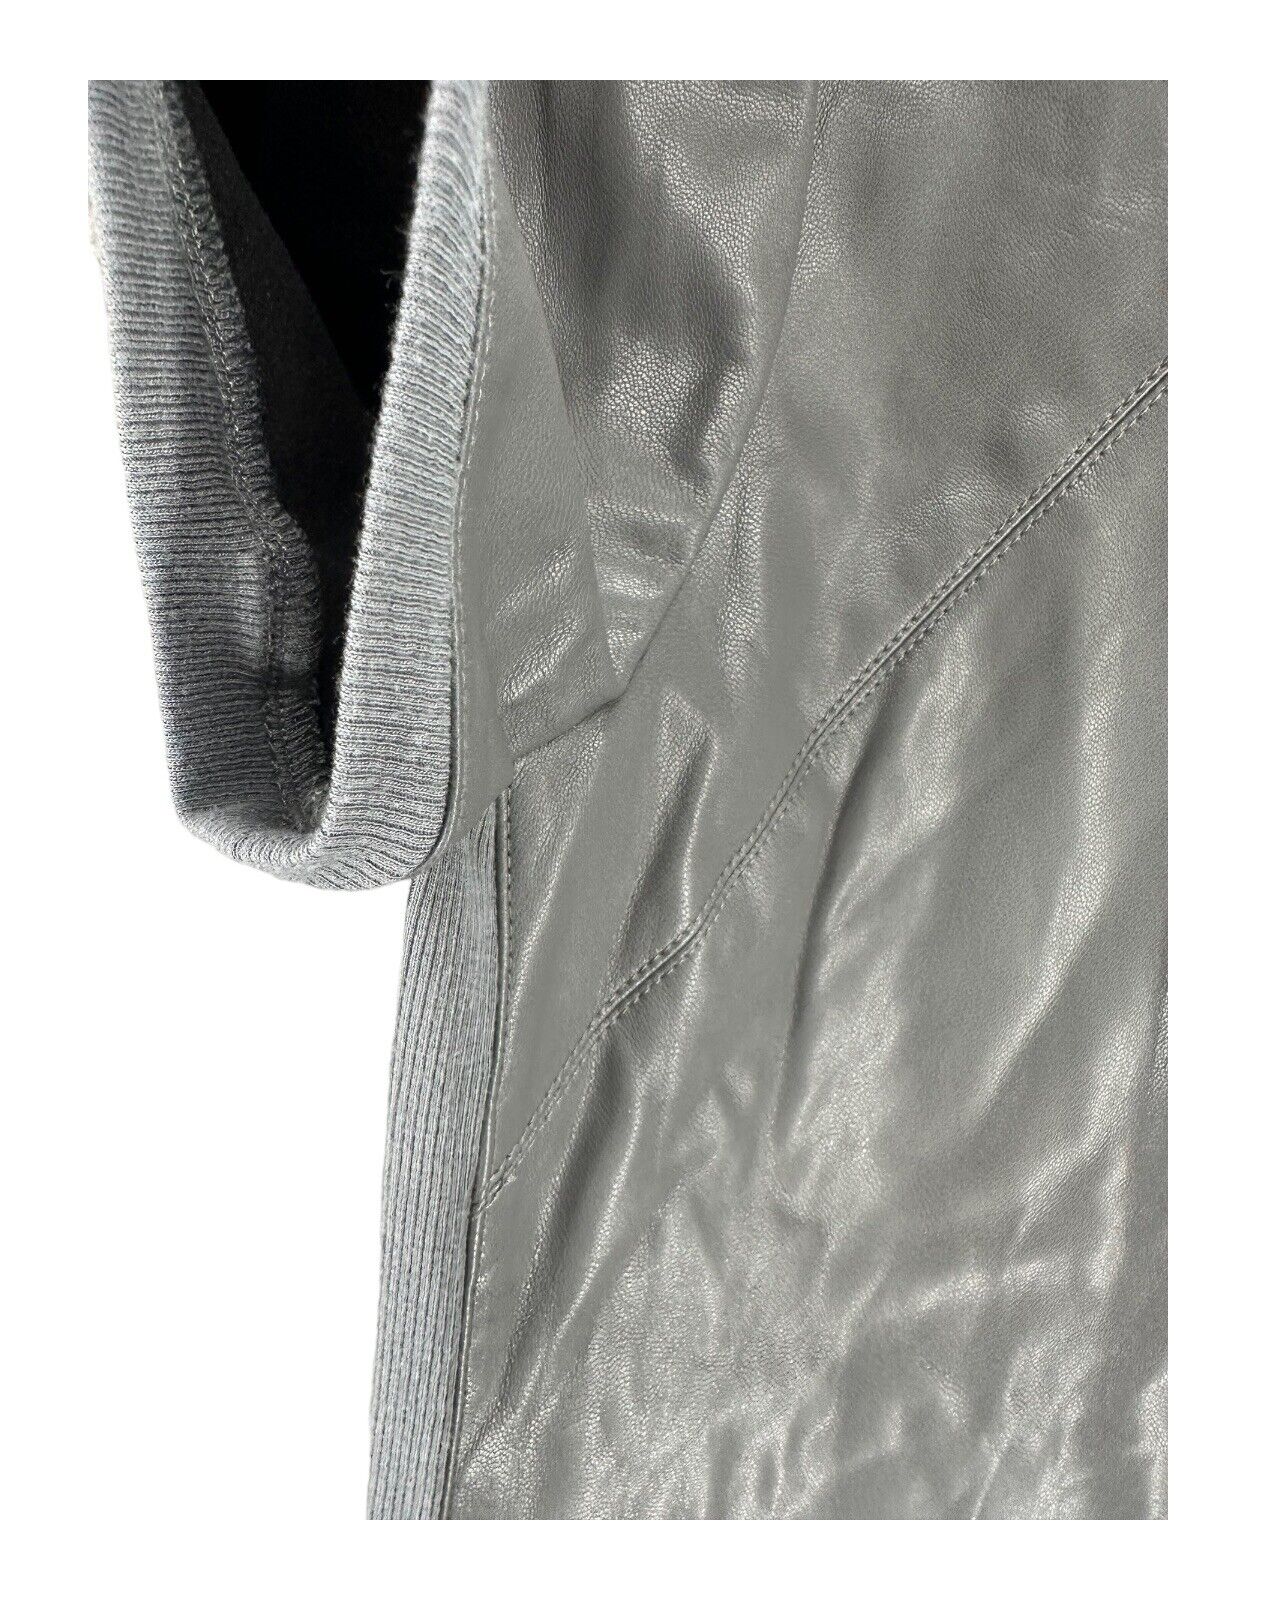 BCBG Maxazria Vegan Leather Blouse Size XS - image 9